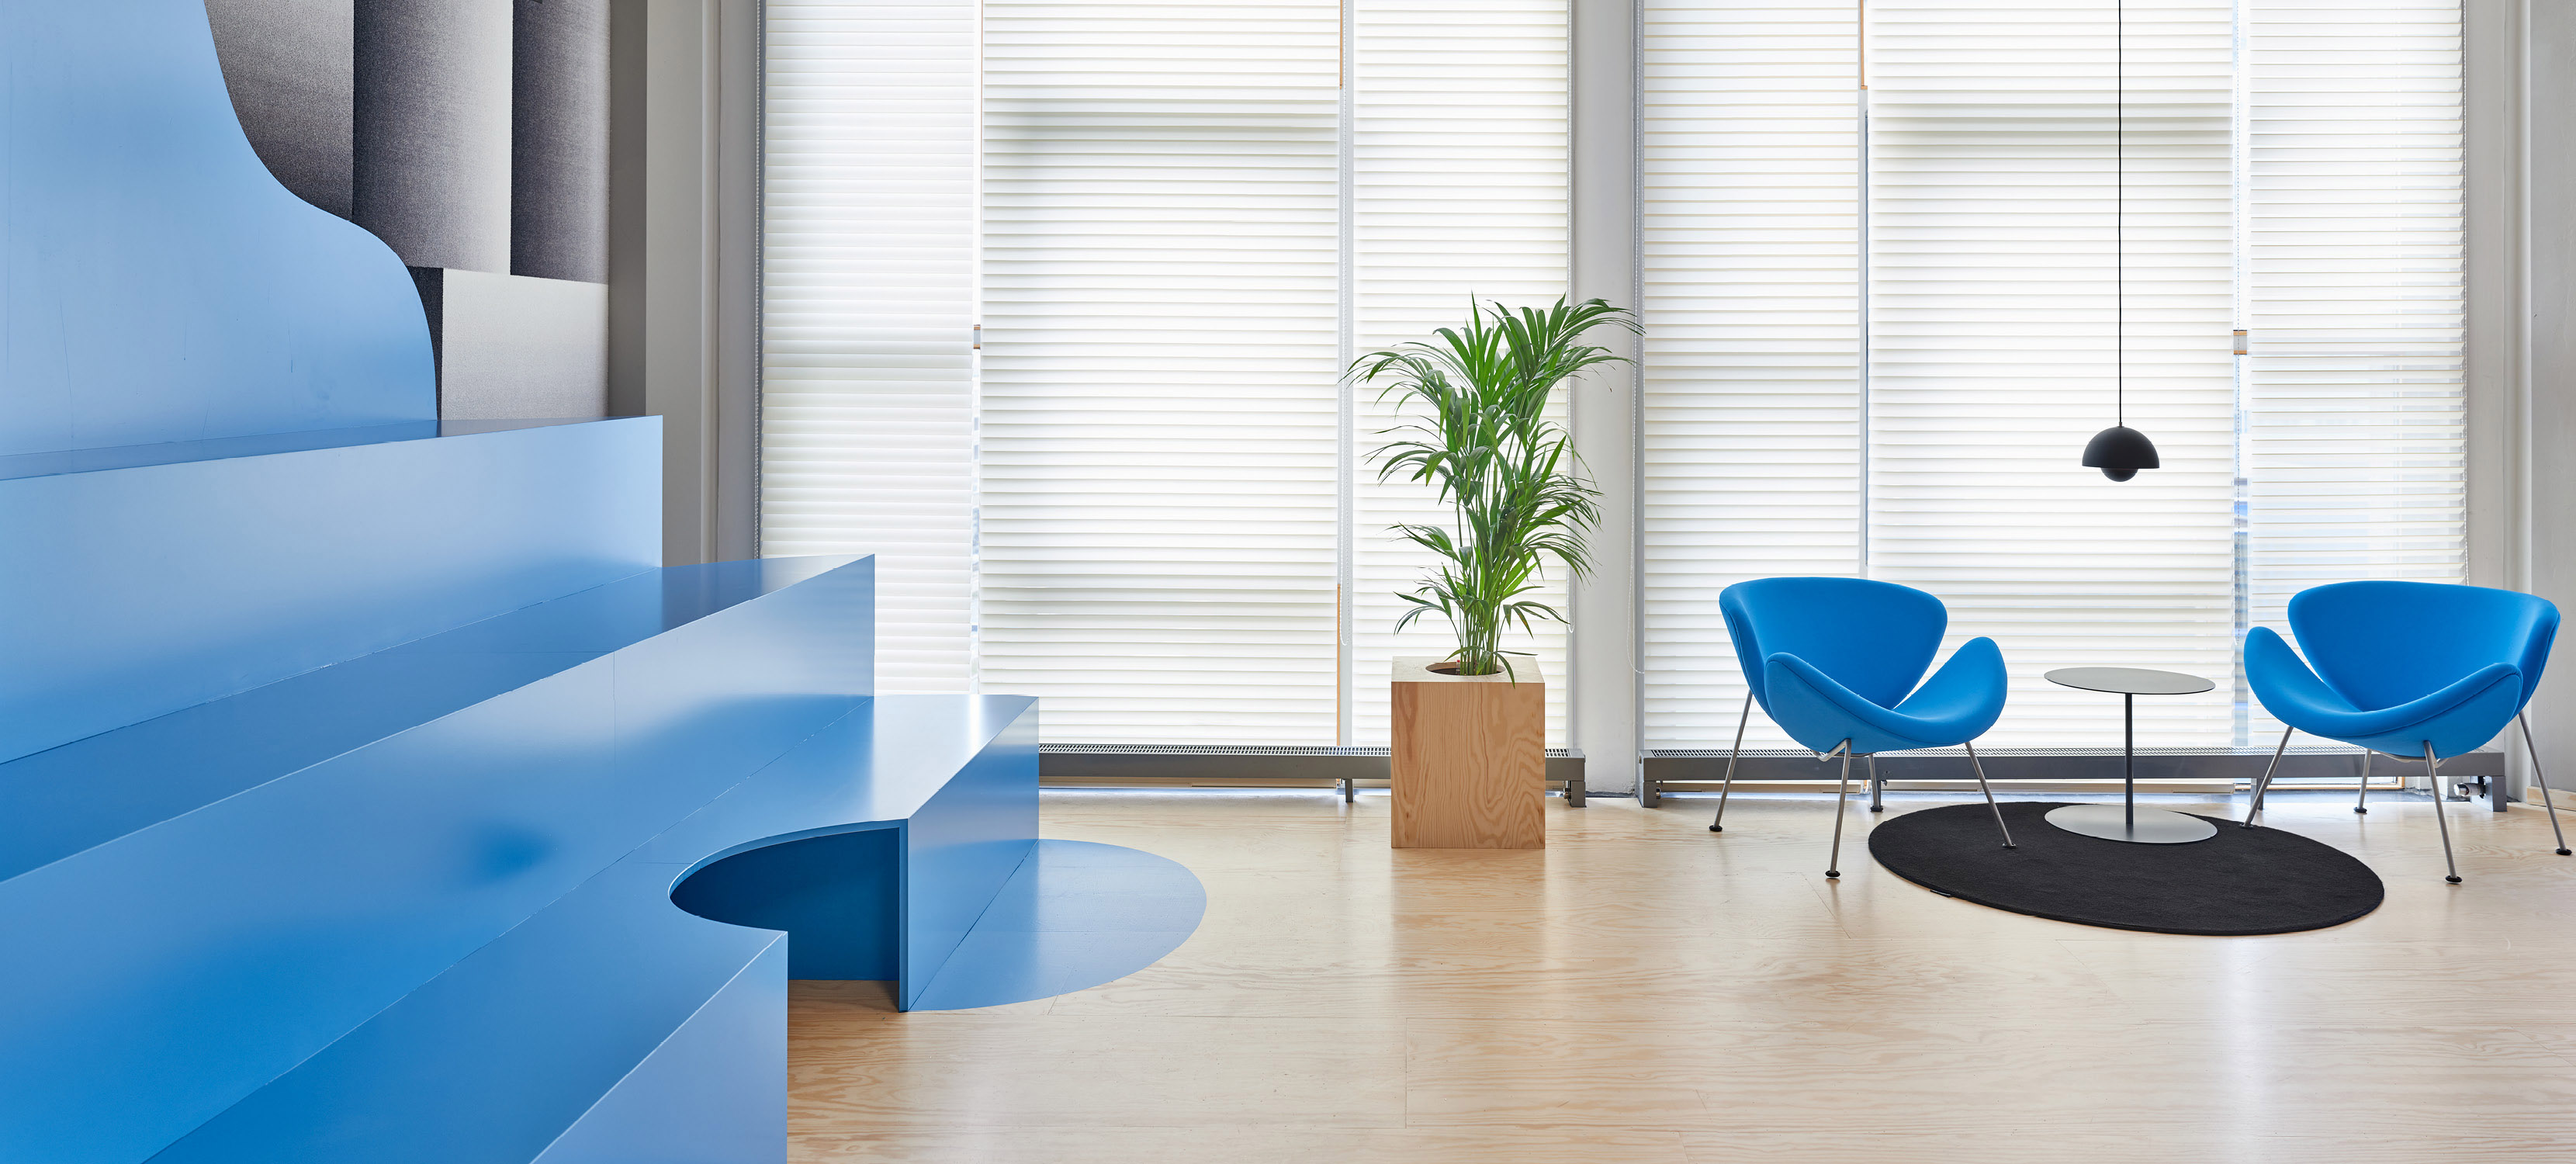 Colourful Office Interior Design